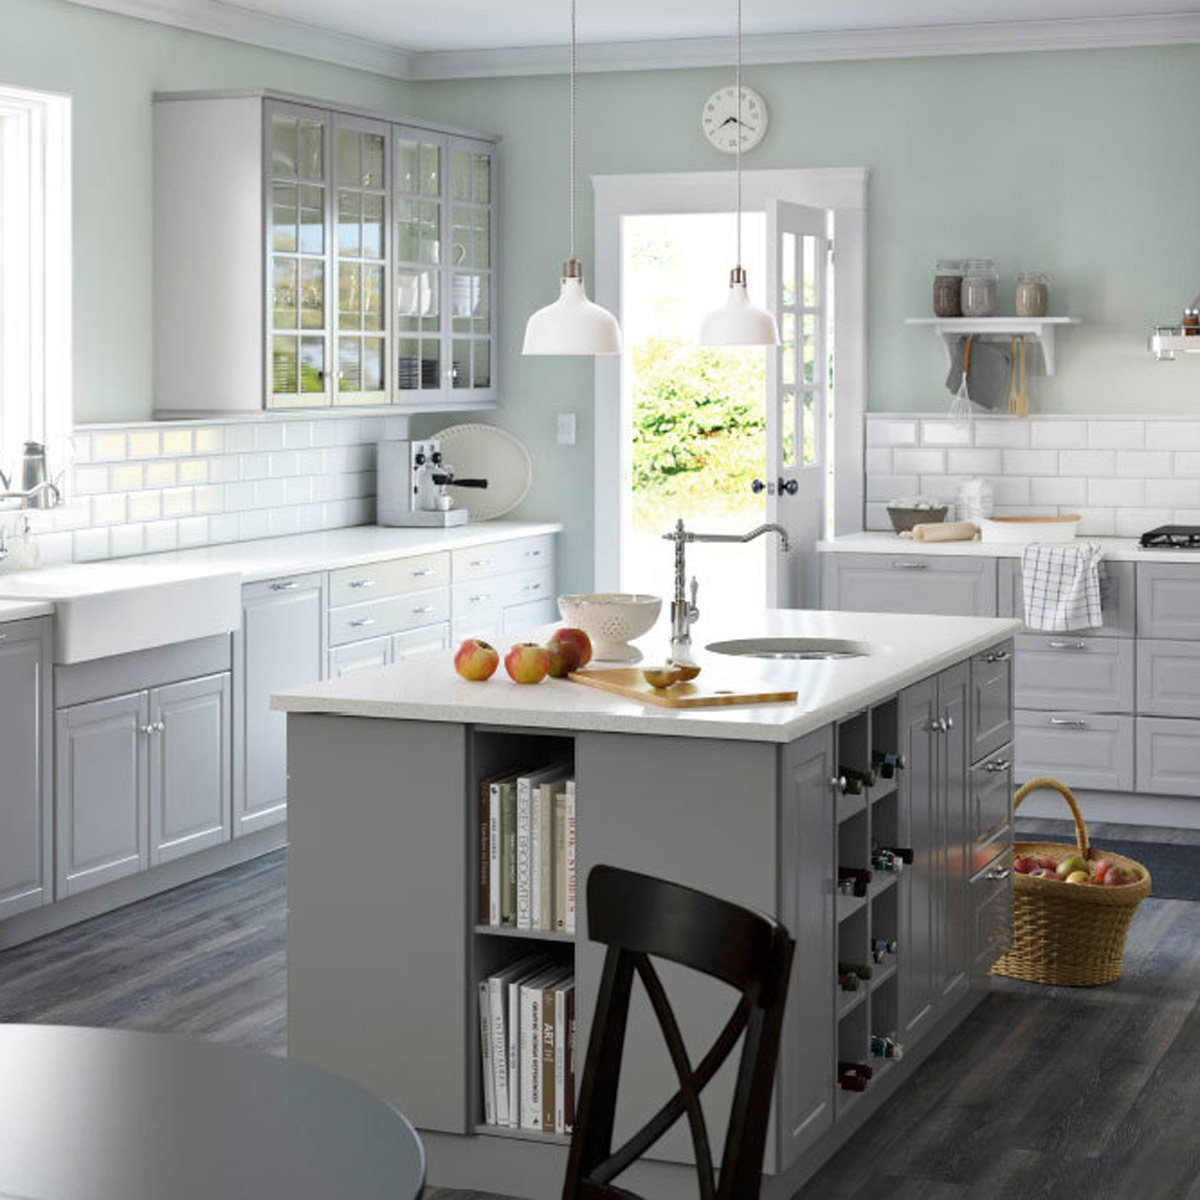 Kitchen Design Ideas With Island
 12 Inspiring Kitchen Island Ideas — The Family Handyman